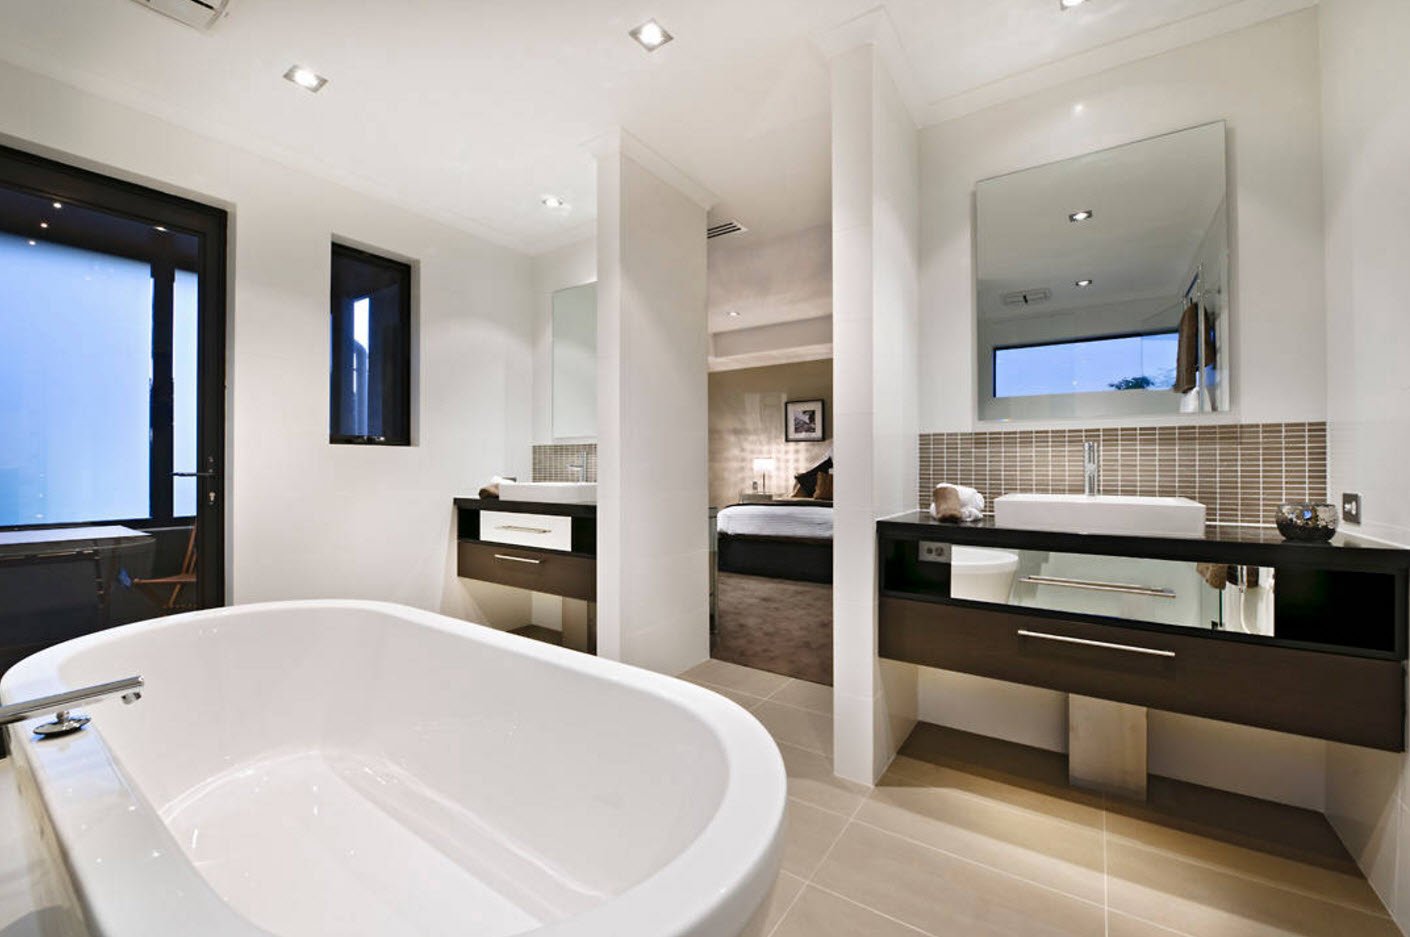 Ванная комната шире ванны. Современная ванная комната. Интерьер ванной комнаты. Ванная комната в современном стиле. Интерьер ванной комнаты в современном стиле.